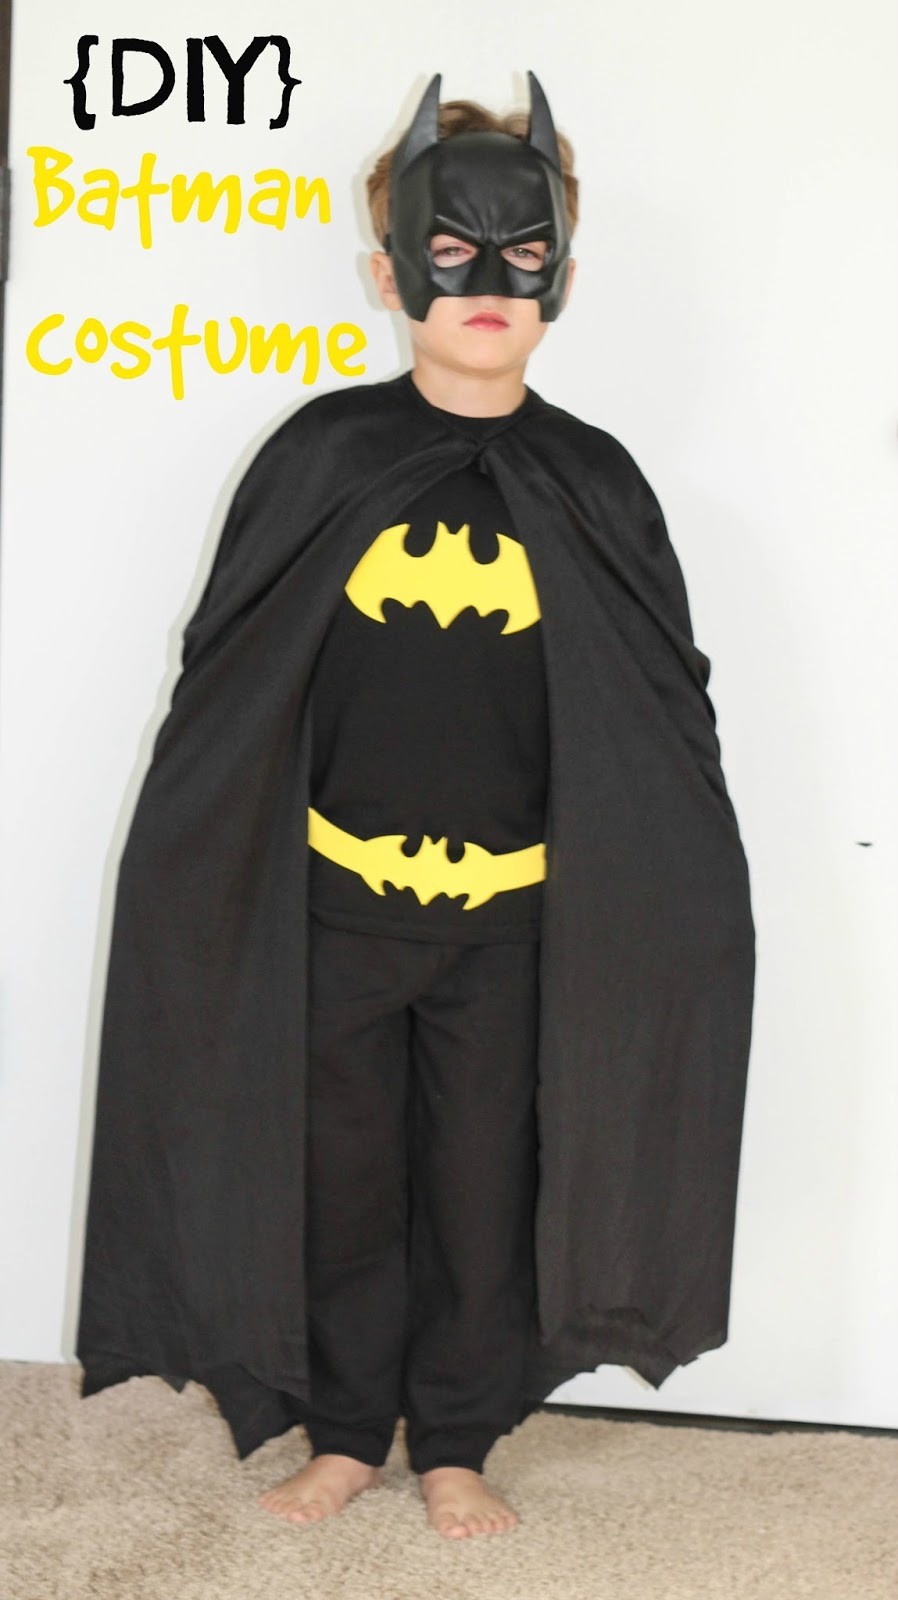 DIY Batman Costume Toddler
 This Happy Life DIY hallween costumes